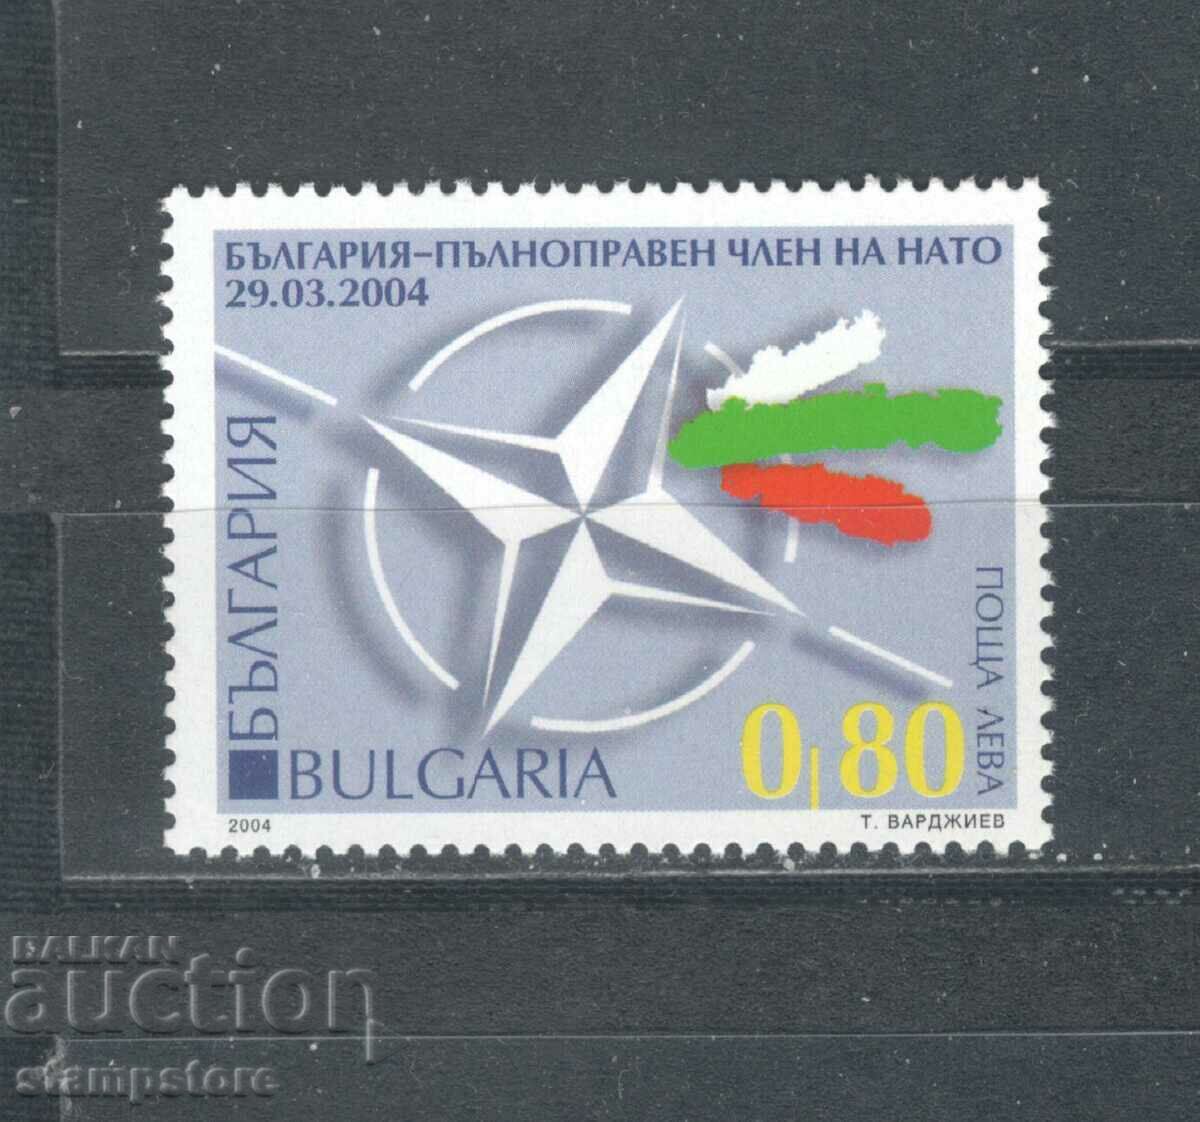 Bulgaria - membru cu drepturi depline al NATO